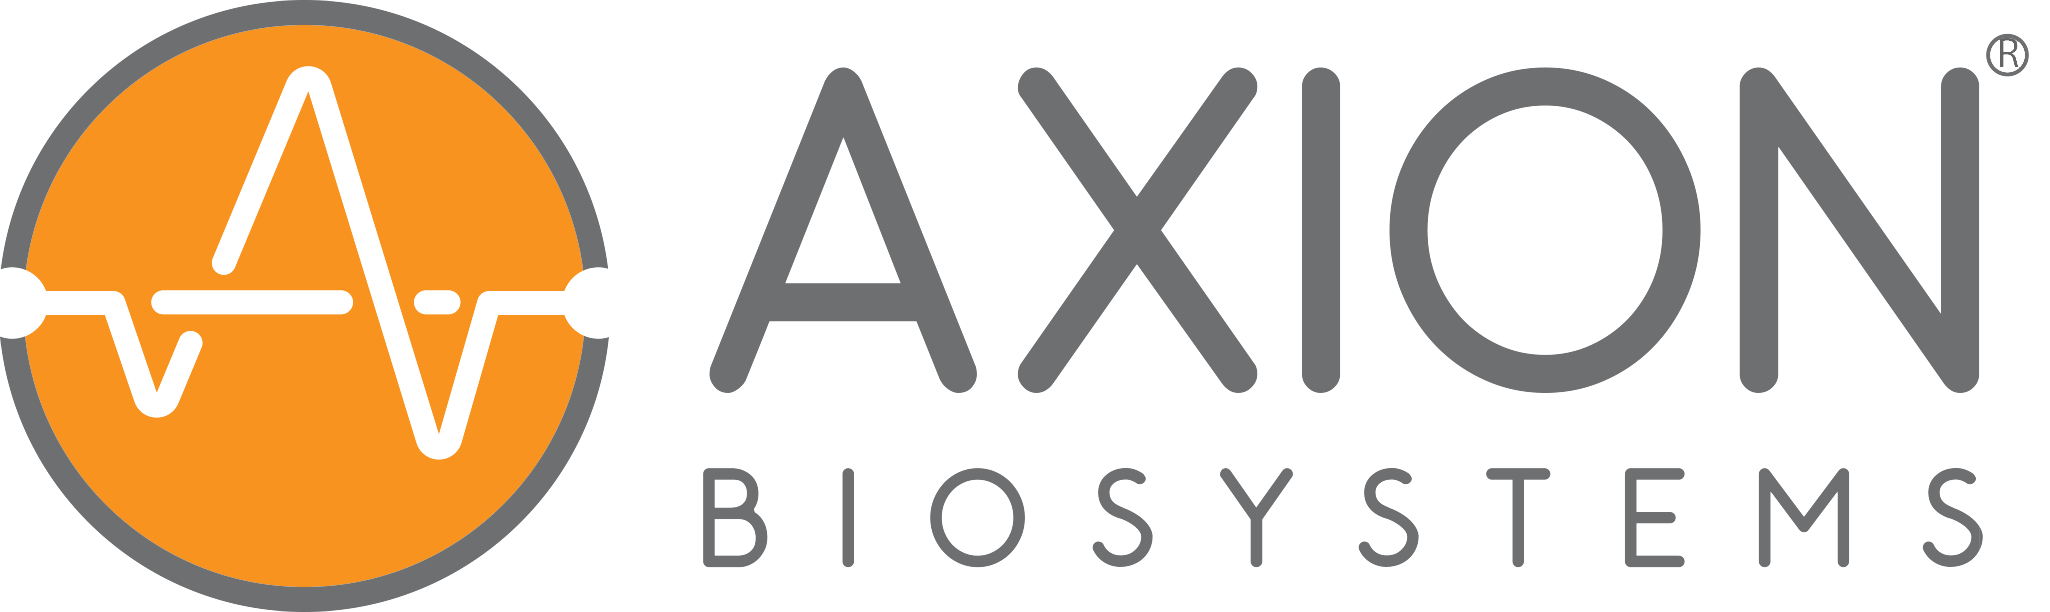 Axion Biosystems logo